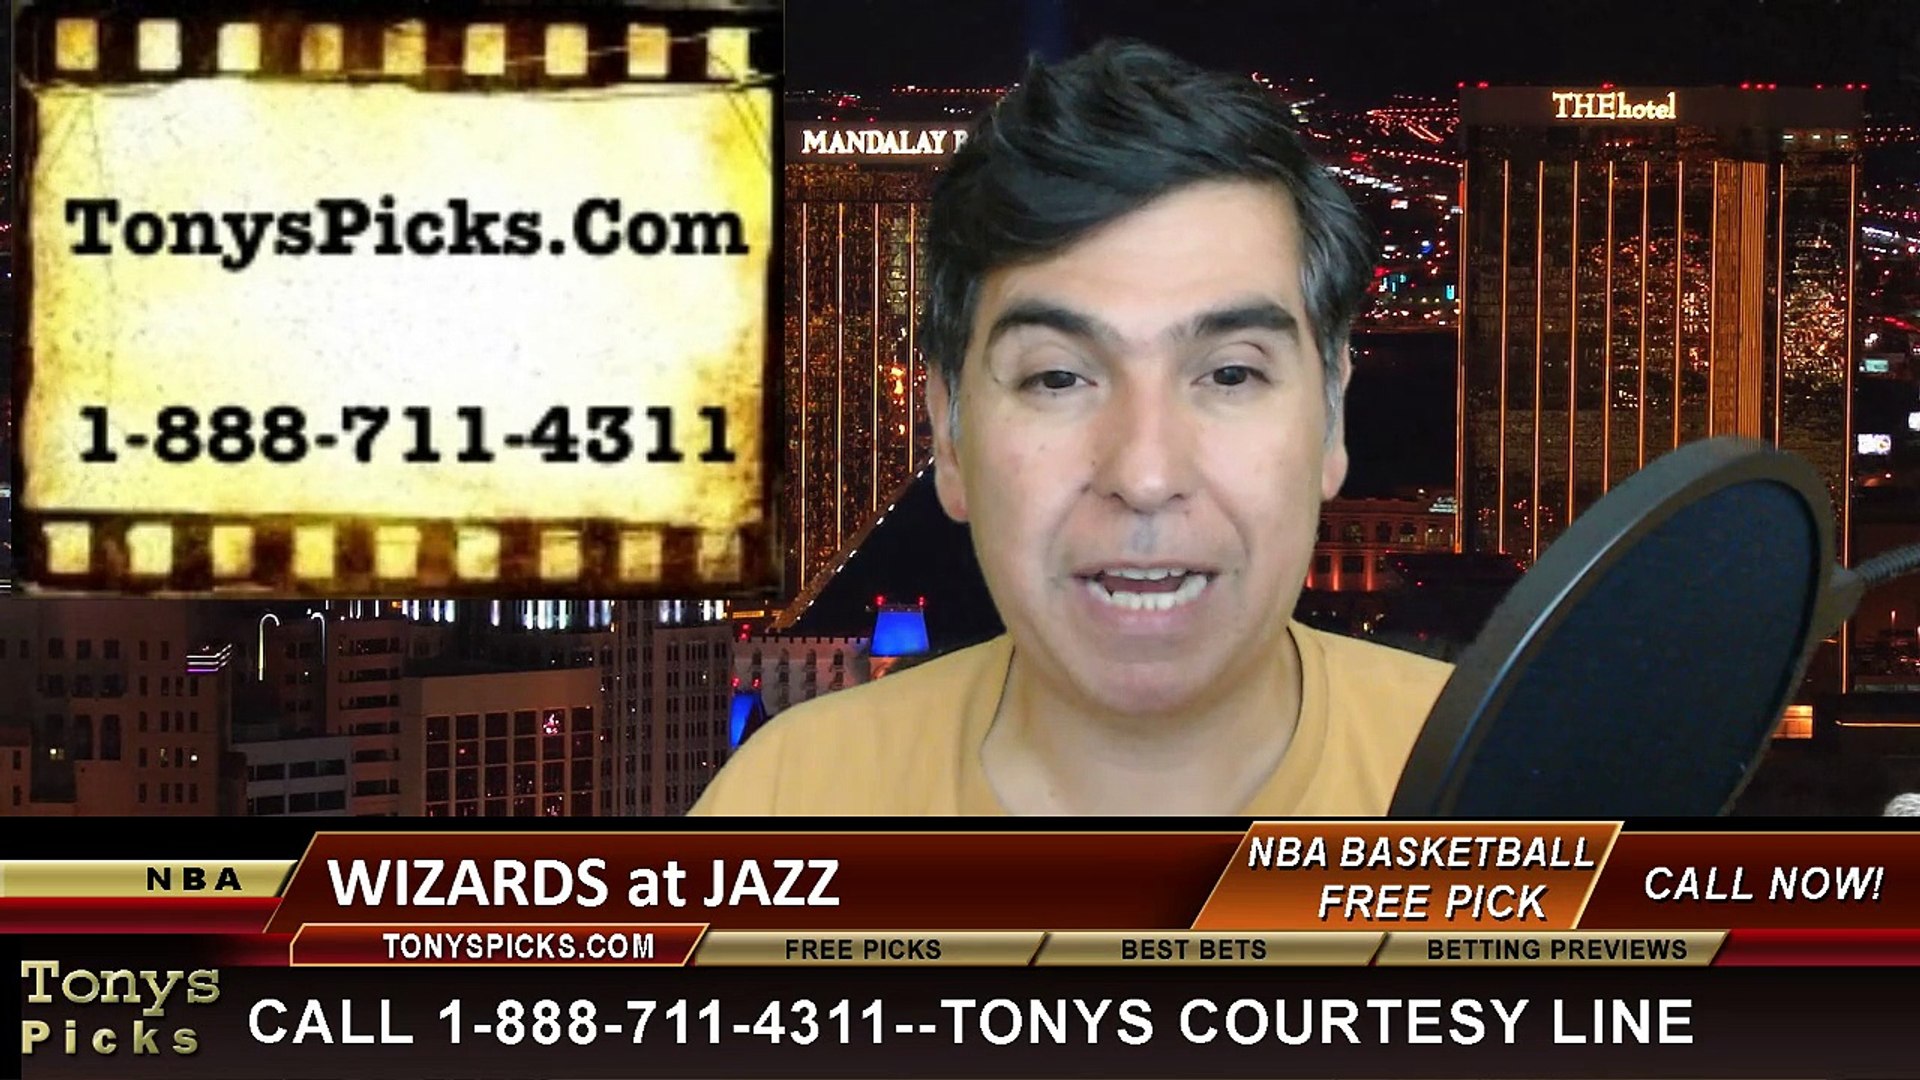 Utah Jazz vs. Washington Wizards Free Pick Prediction NBA Pro Basketball Odds Preview 3-18-2015